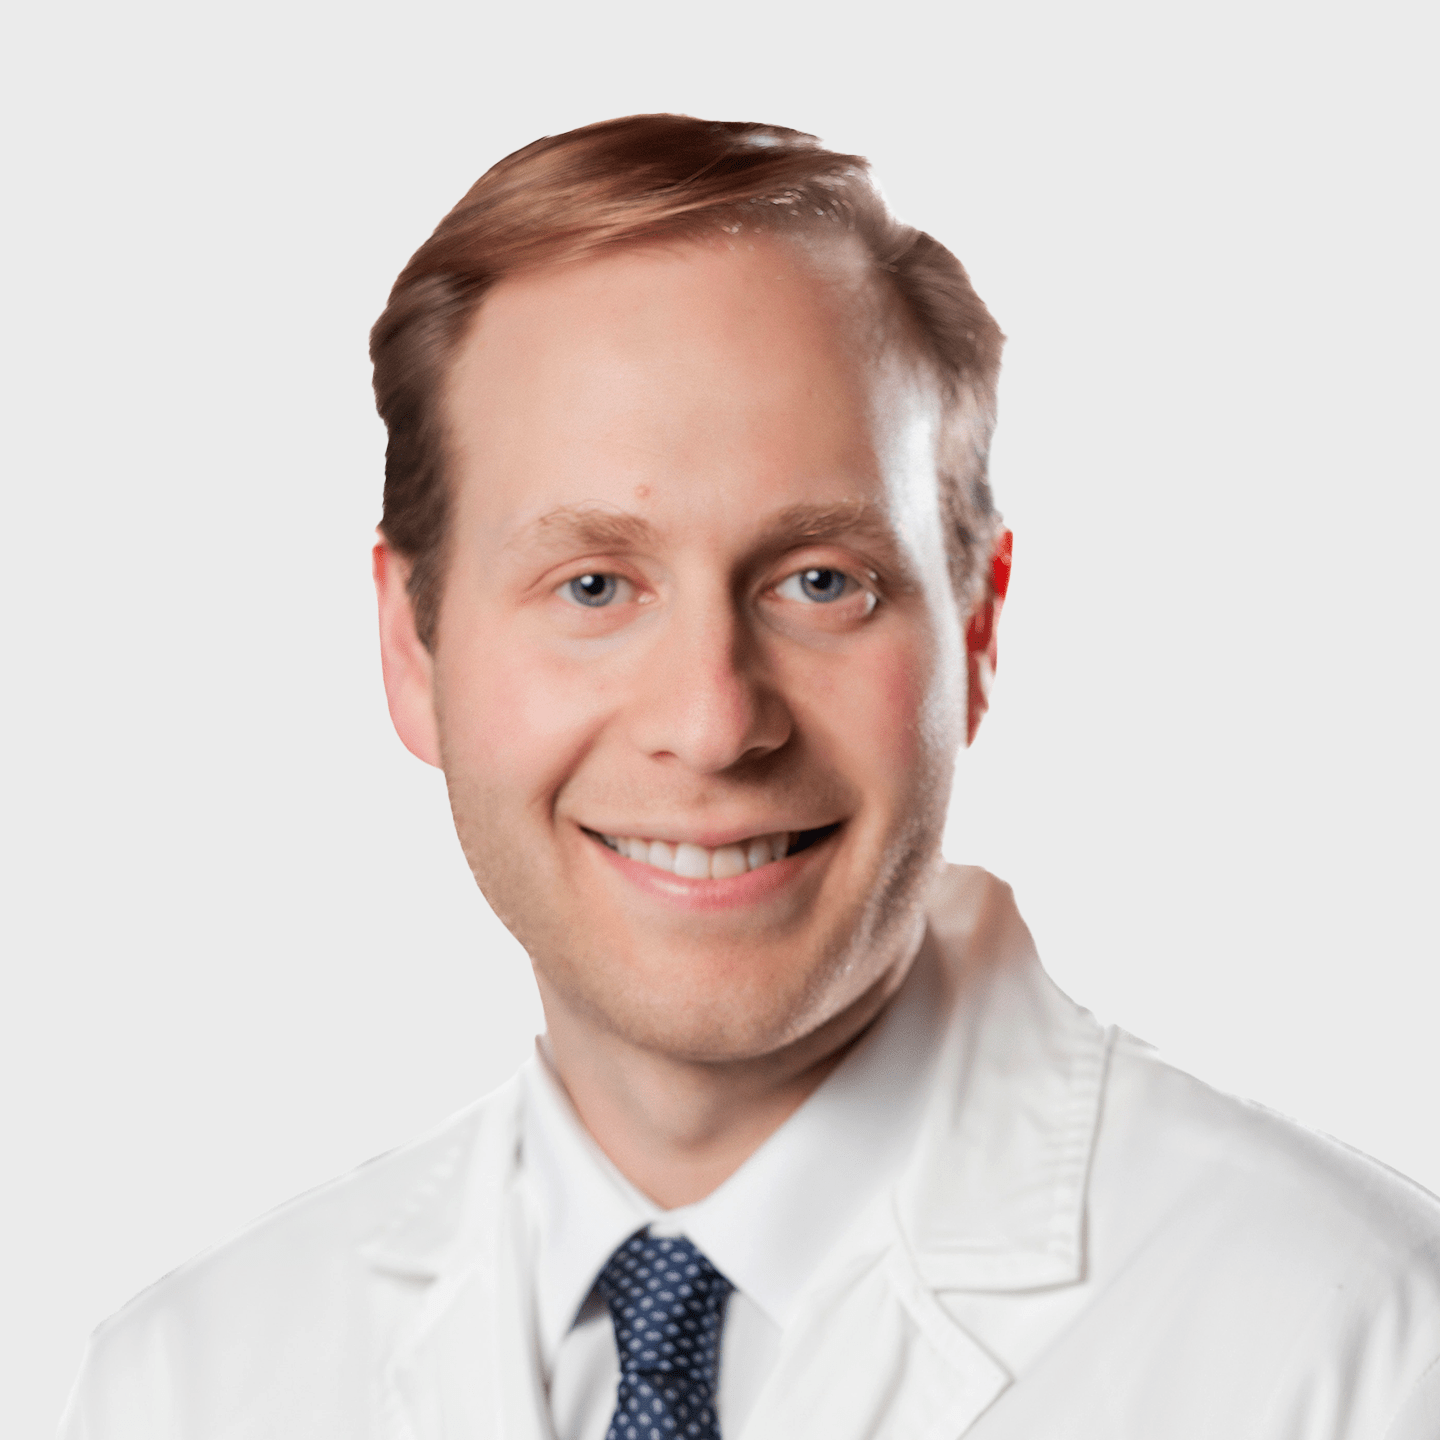 Physician Spotlight on Dr. Lee Bloom